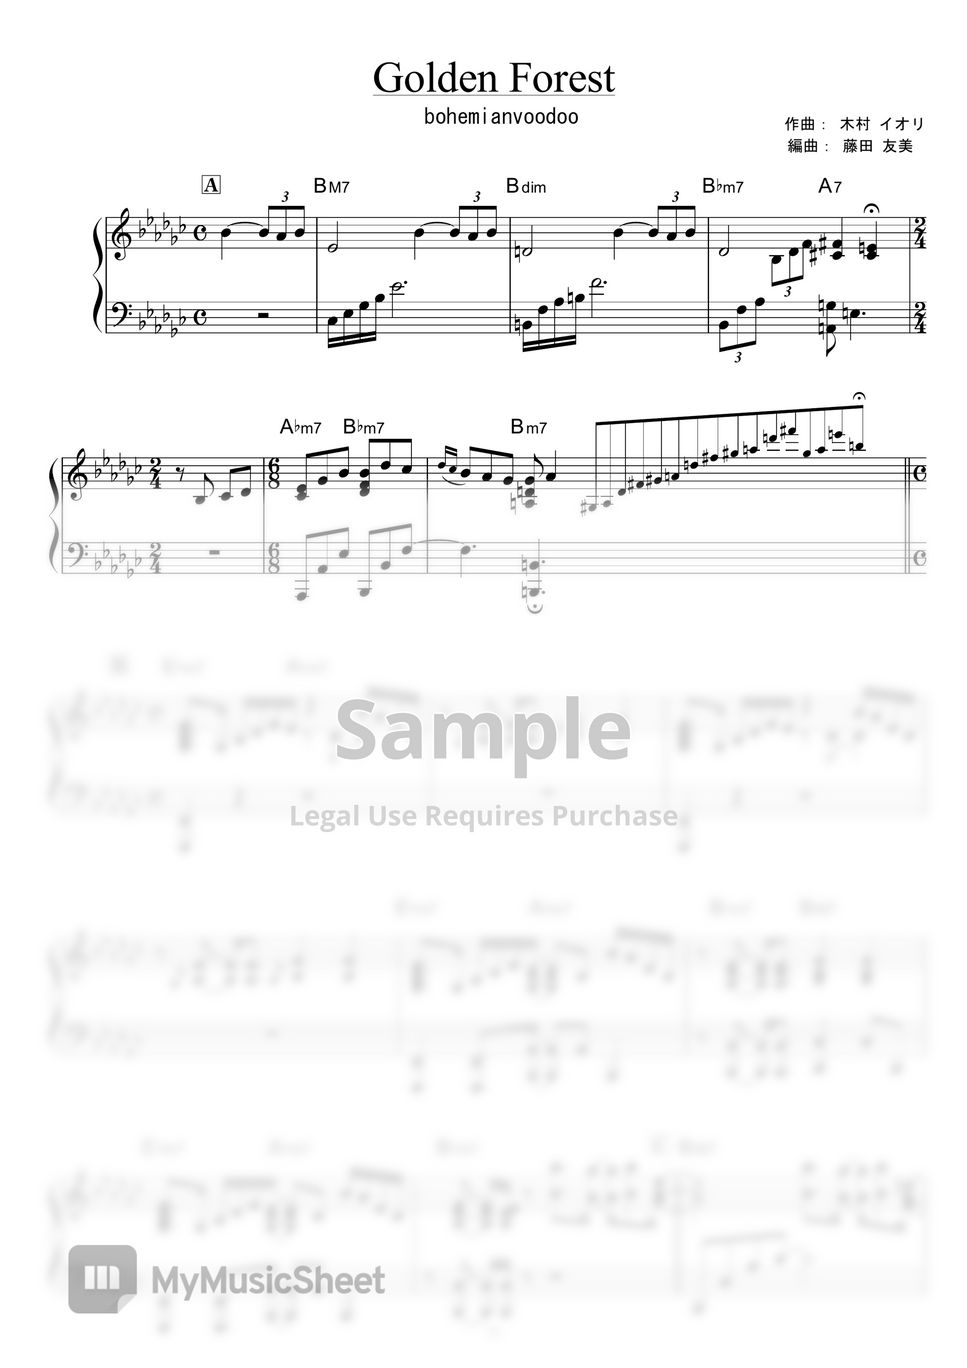 bohemianvoodoo - Golden Forest by piano*score